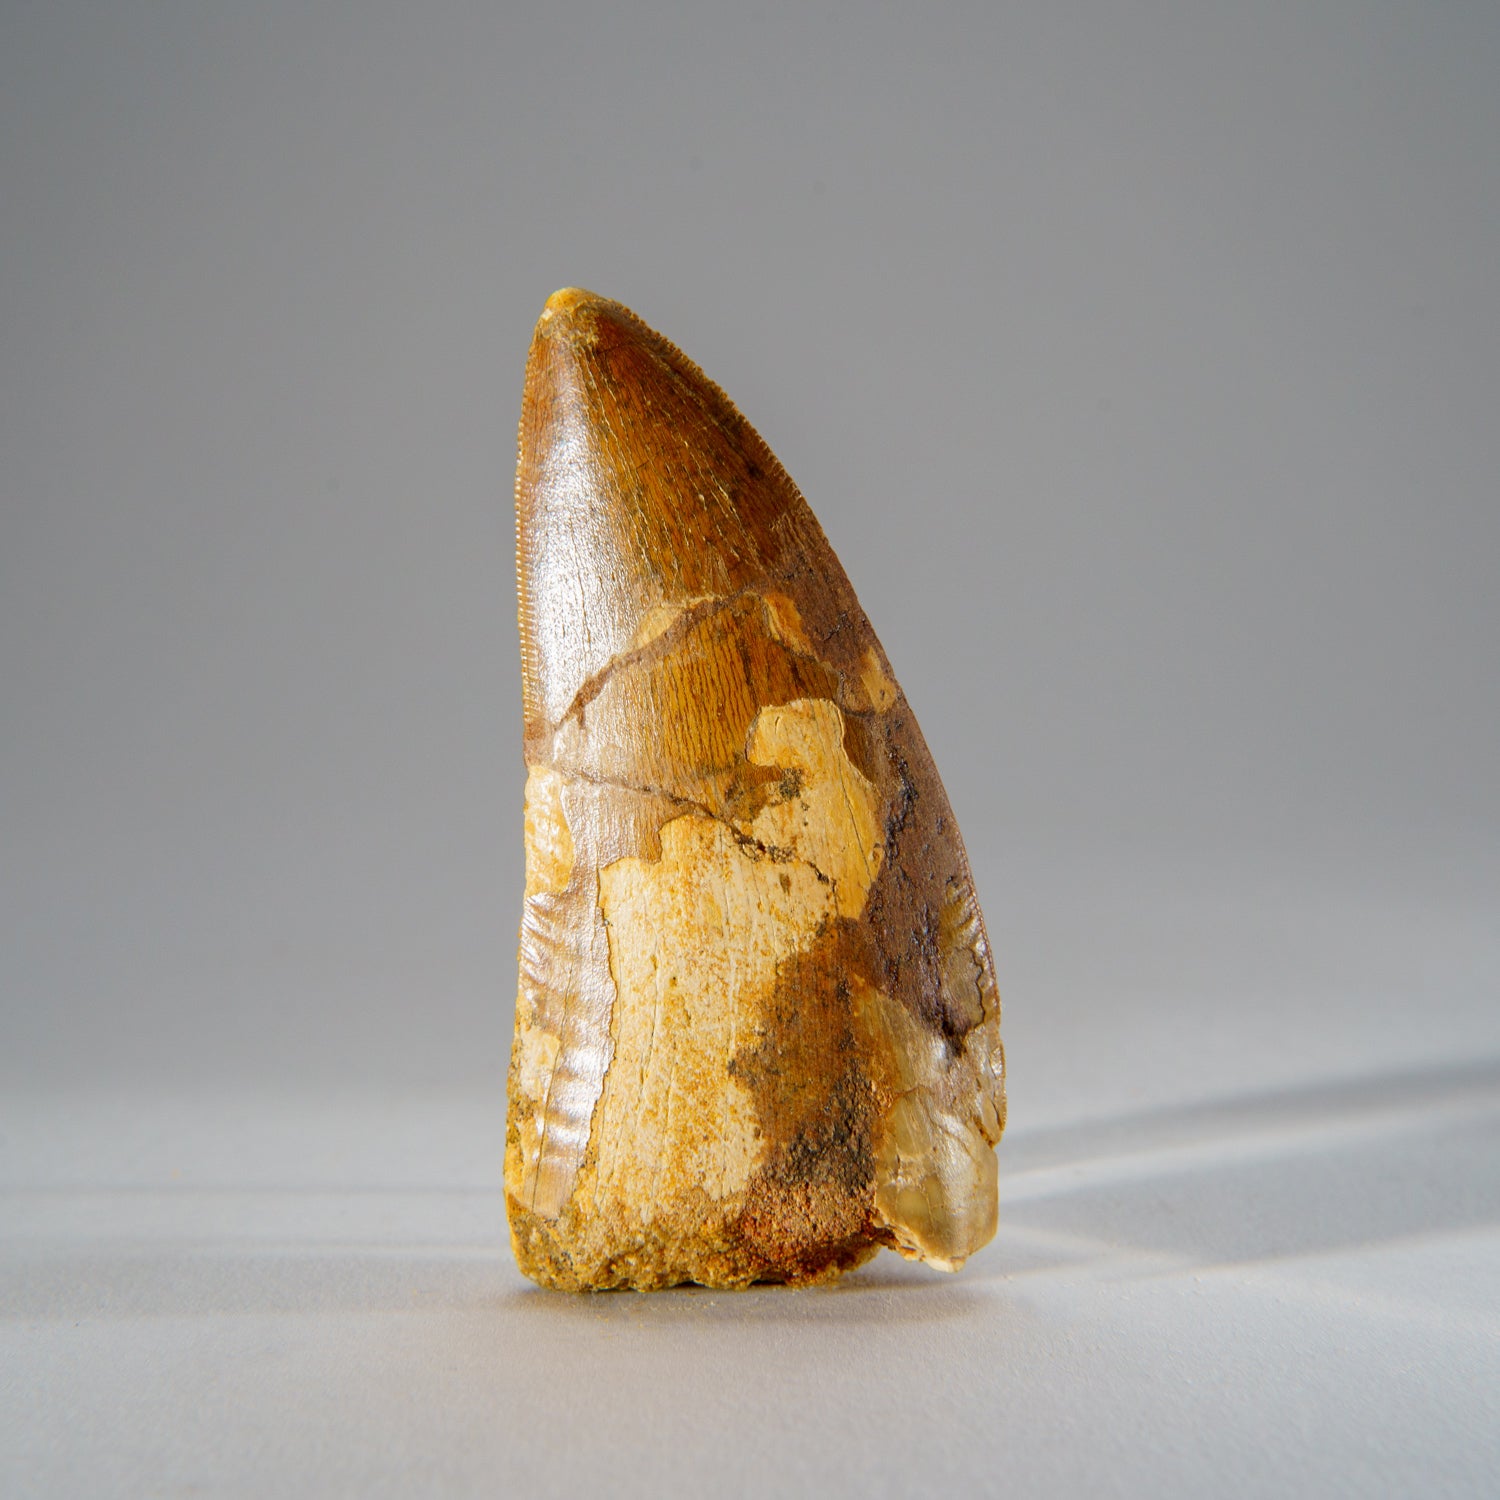 Genuine Carcharodontosaurus Tooth in Display Box (52 grams)